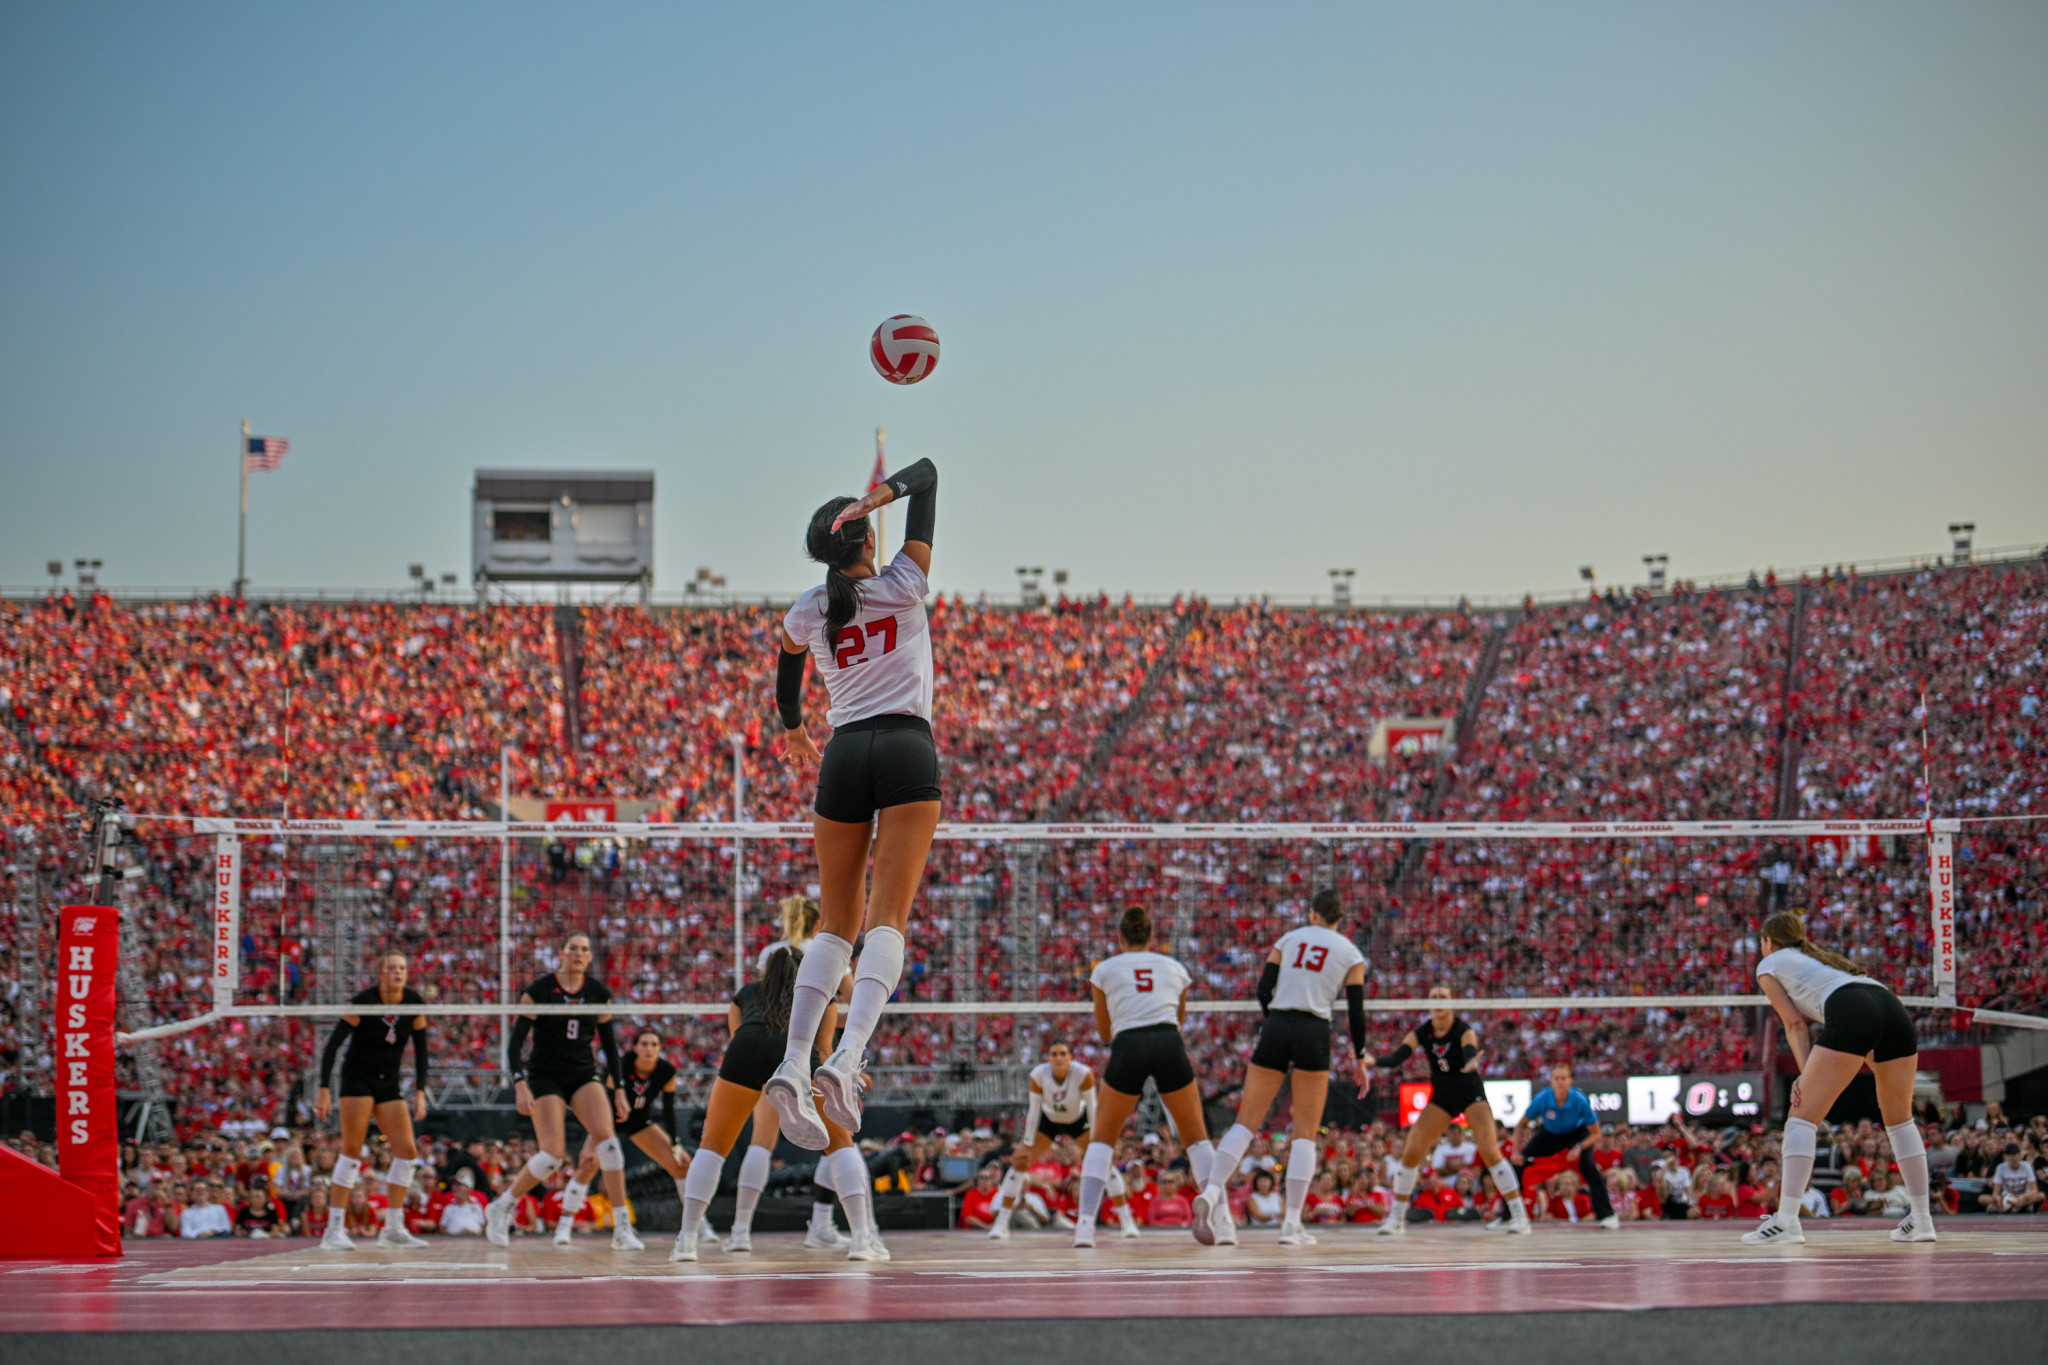 University of Nebraska volleyball match sets womens sport attendance record